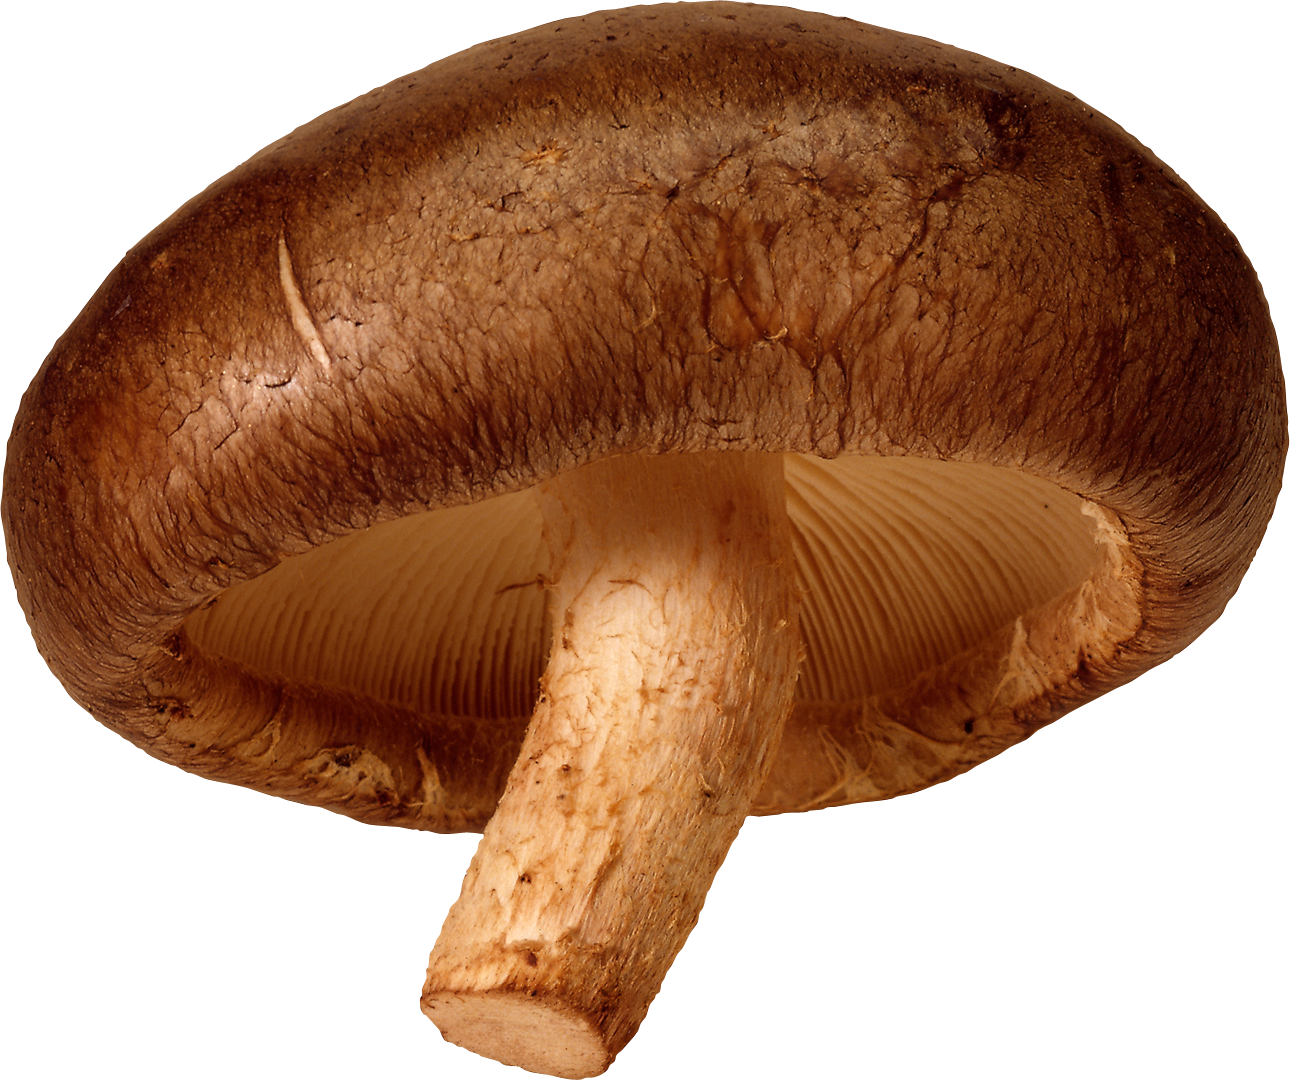 Mushroom Png Image - Mushroom, Transparent background PNG HD thumbnail